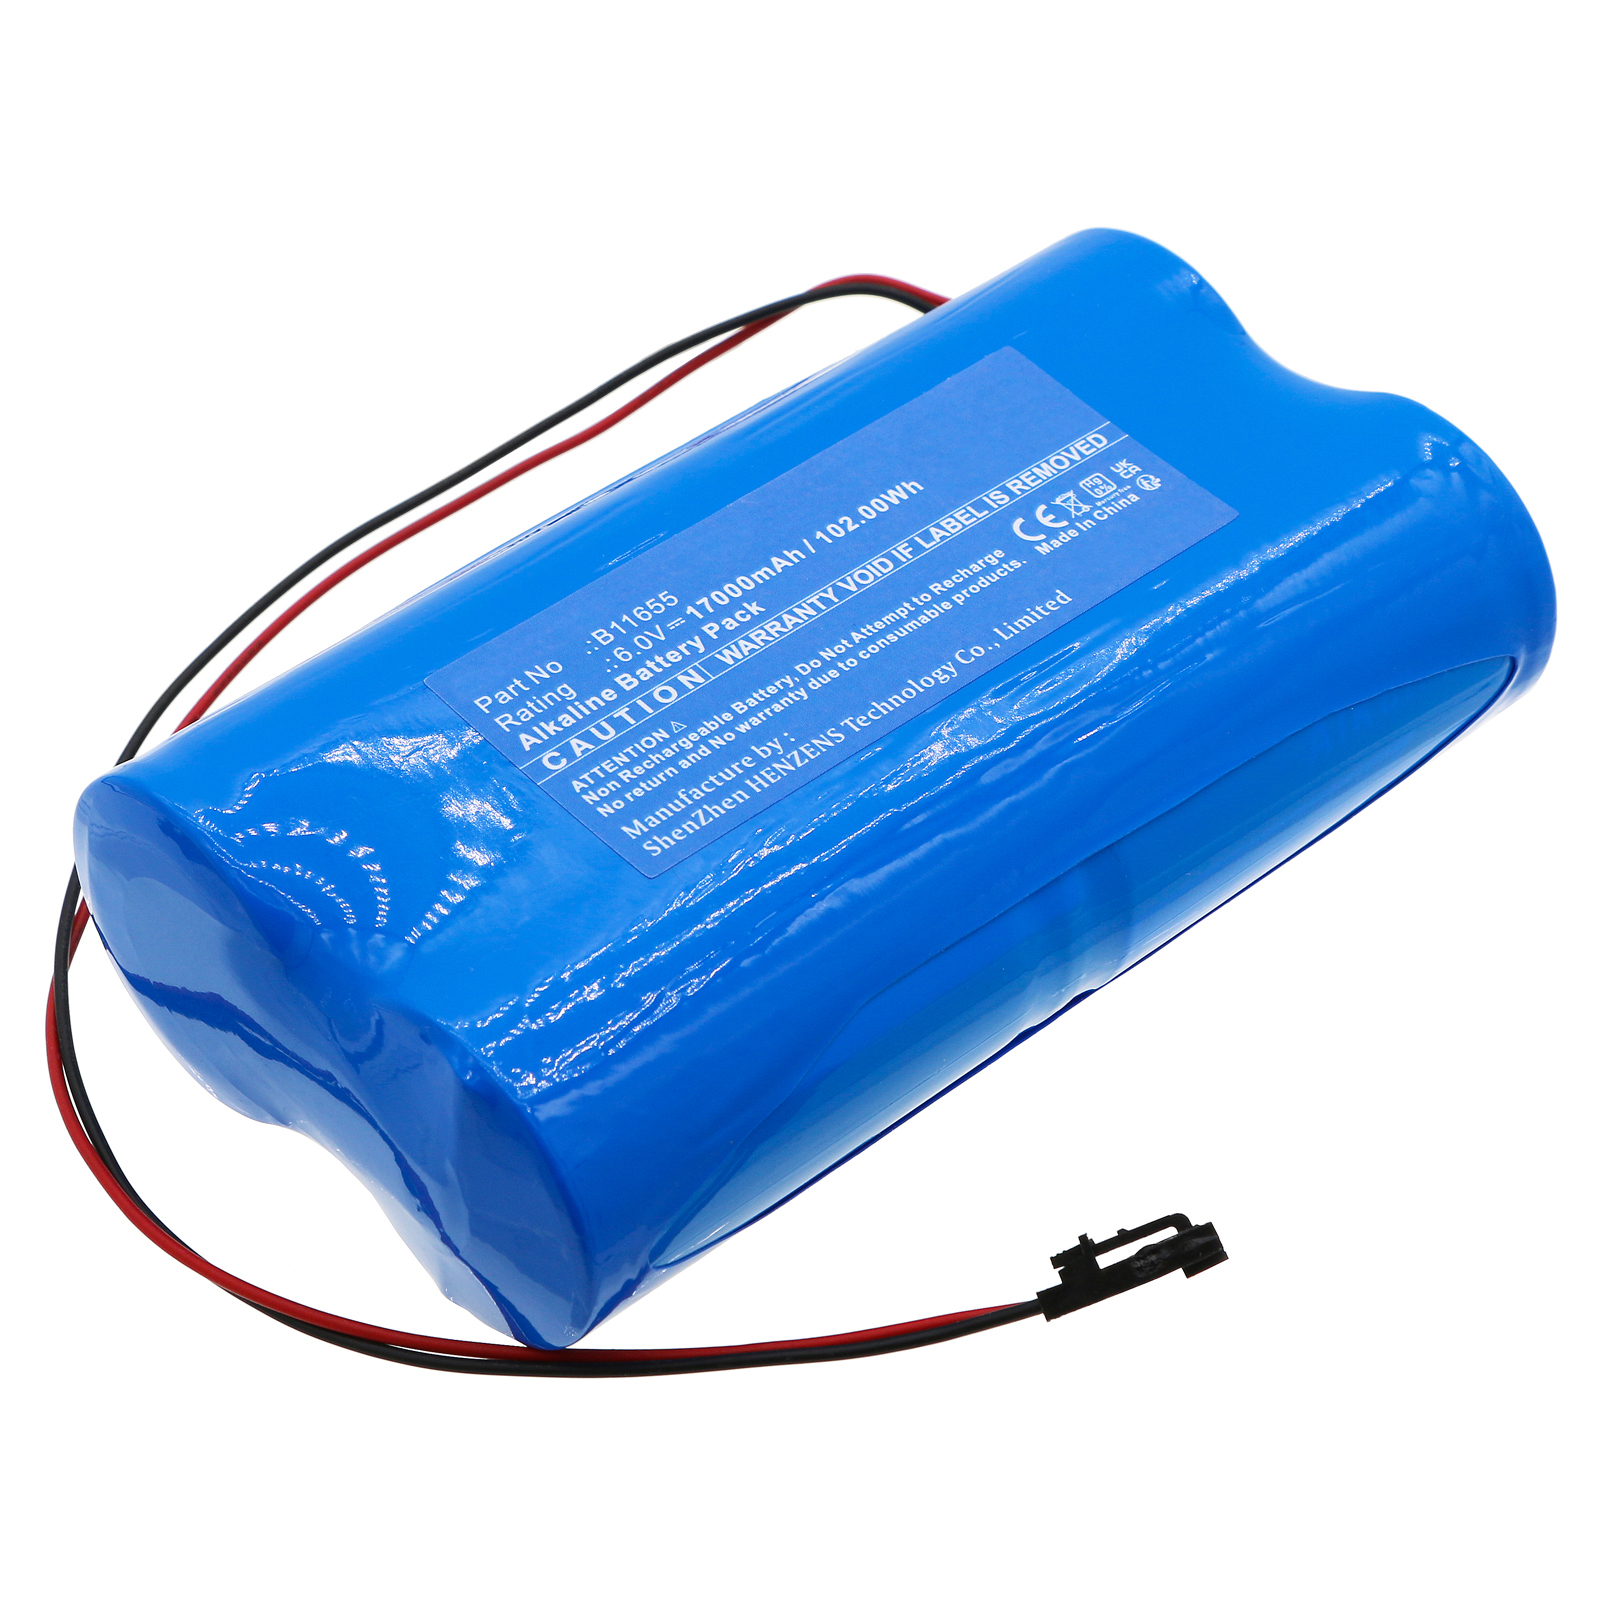 Synergy Digital Medical Battery, Compatible with Lionville B11655 Medical Battery (Alkaline, 6V, 17000mAh)